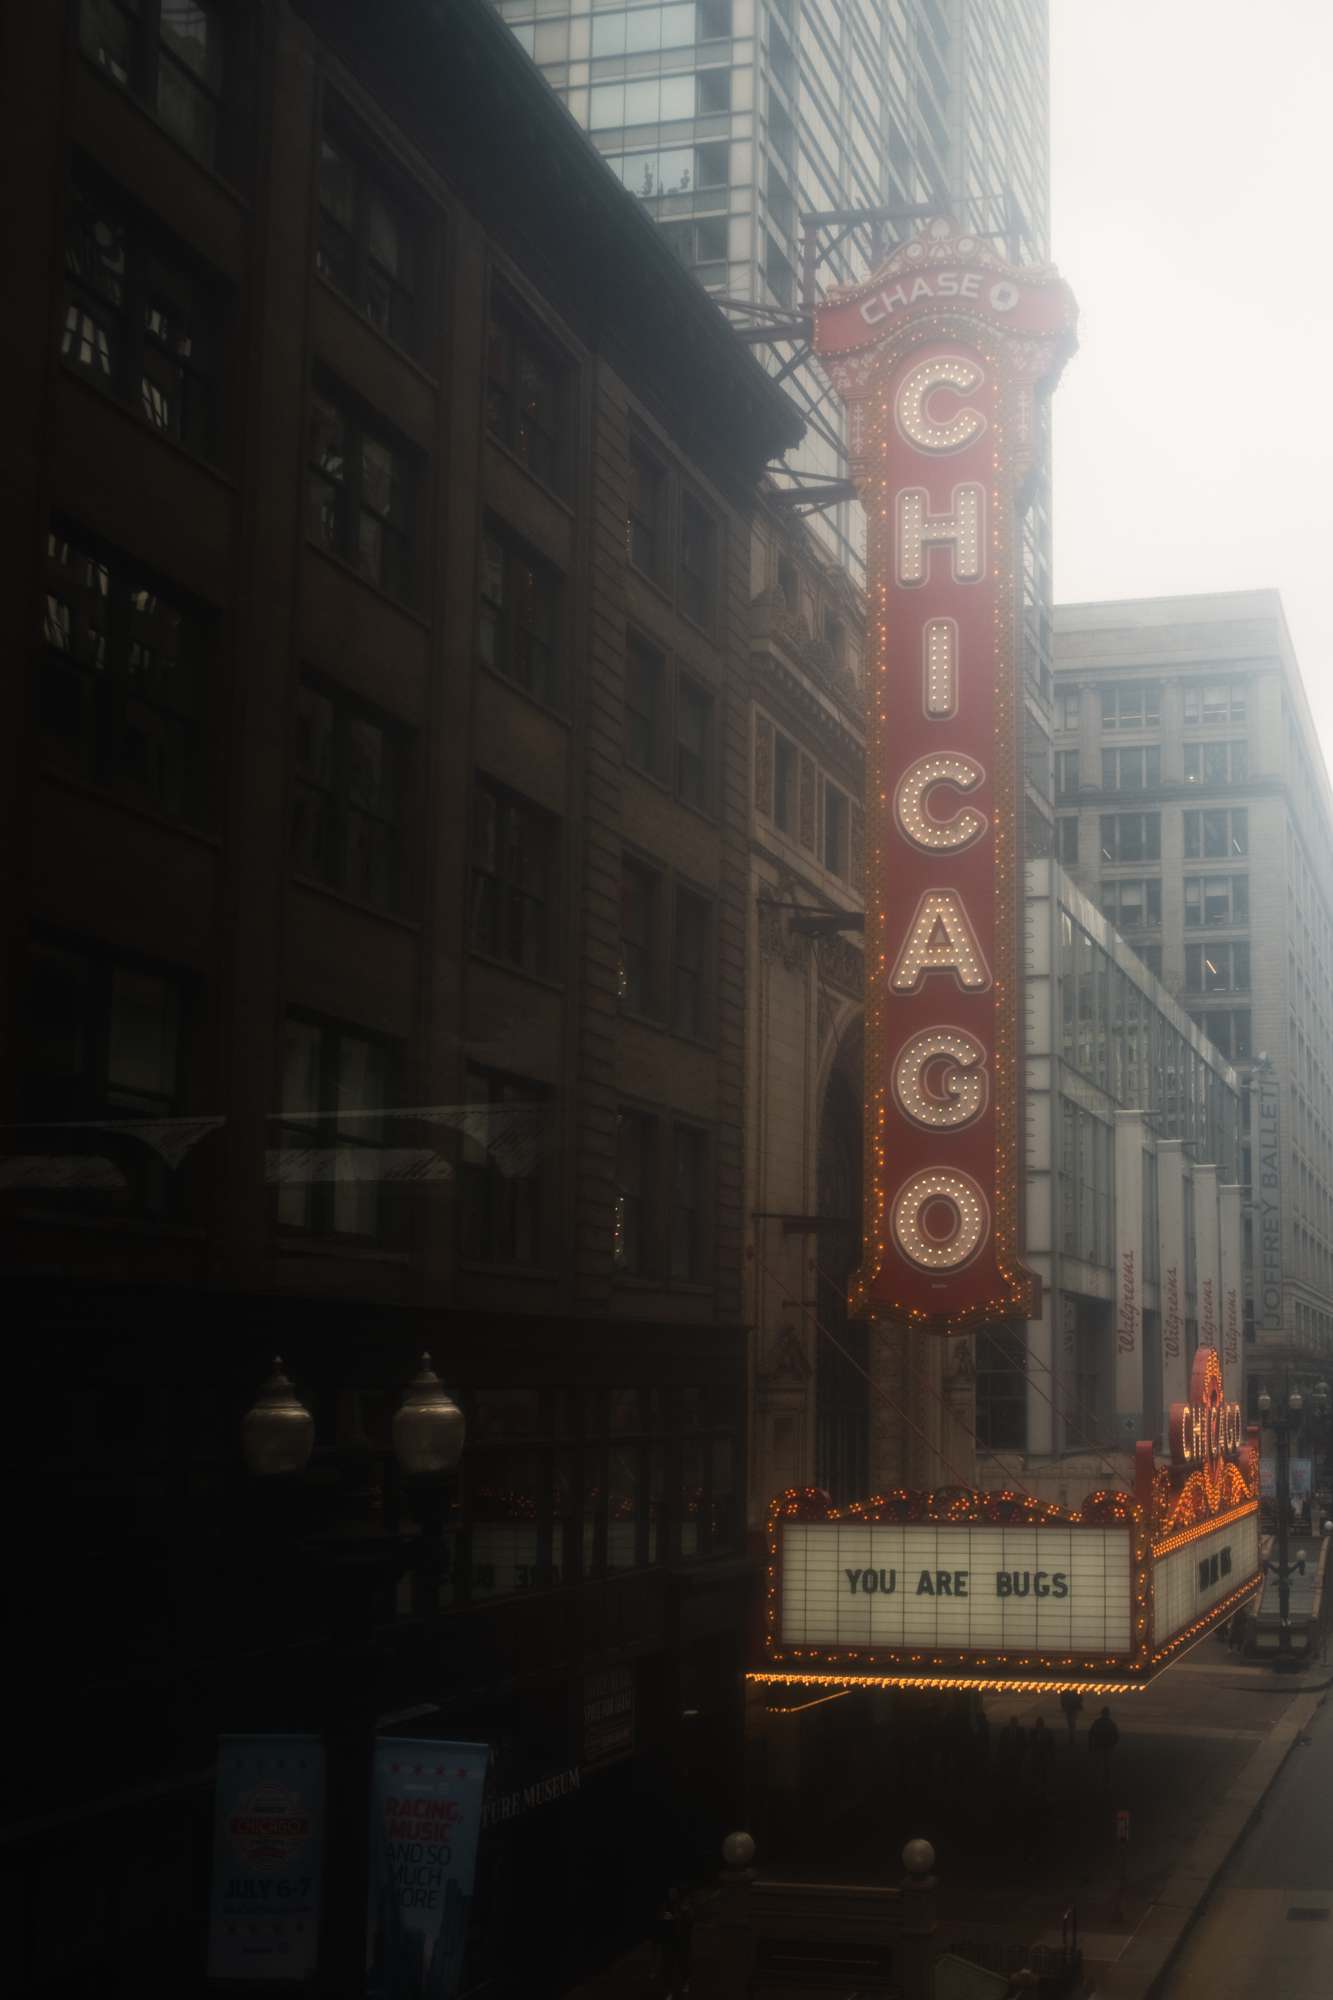 Chicago Theatre Marquee